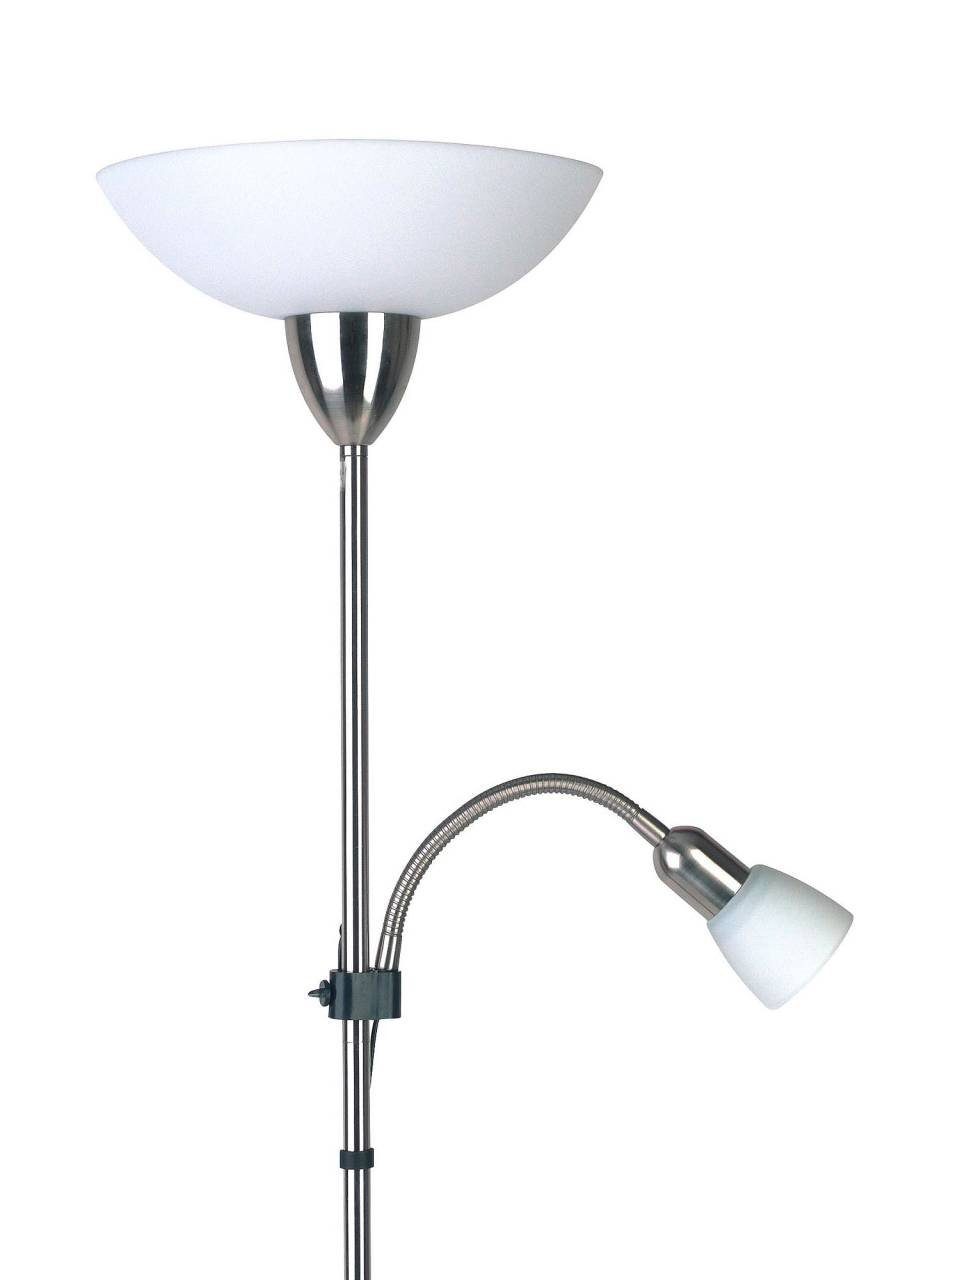 g eisen/weiß Lampe A60, Brilliant Deckenfluter 1x E27, Lesearm Darlington 60W, Darlington, Stehlampe